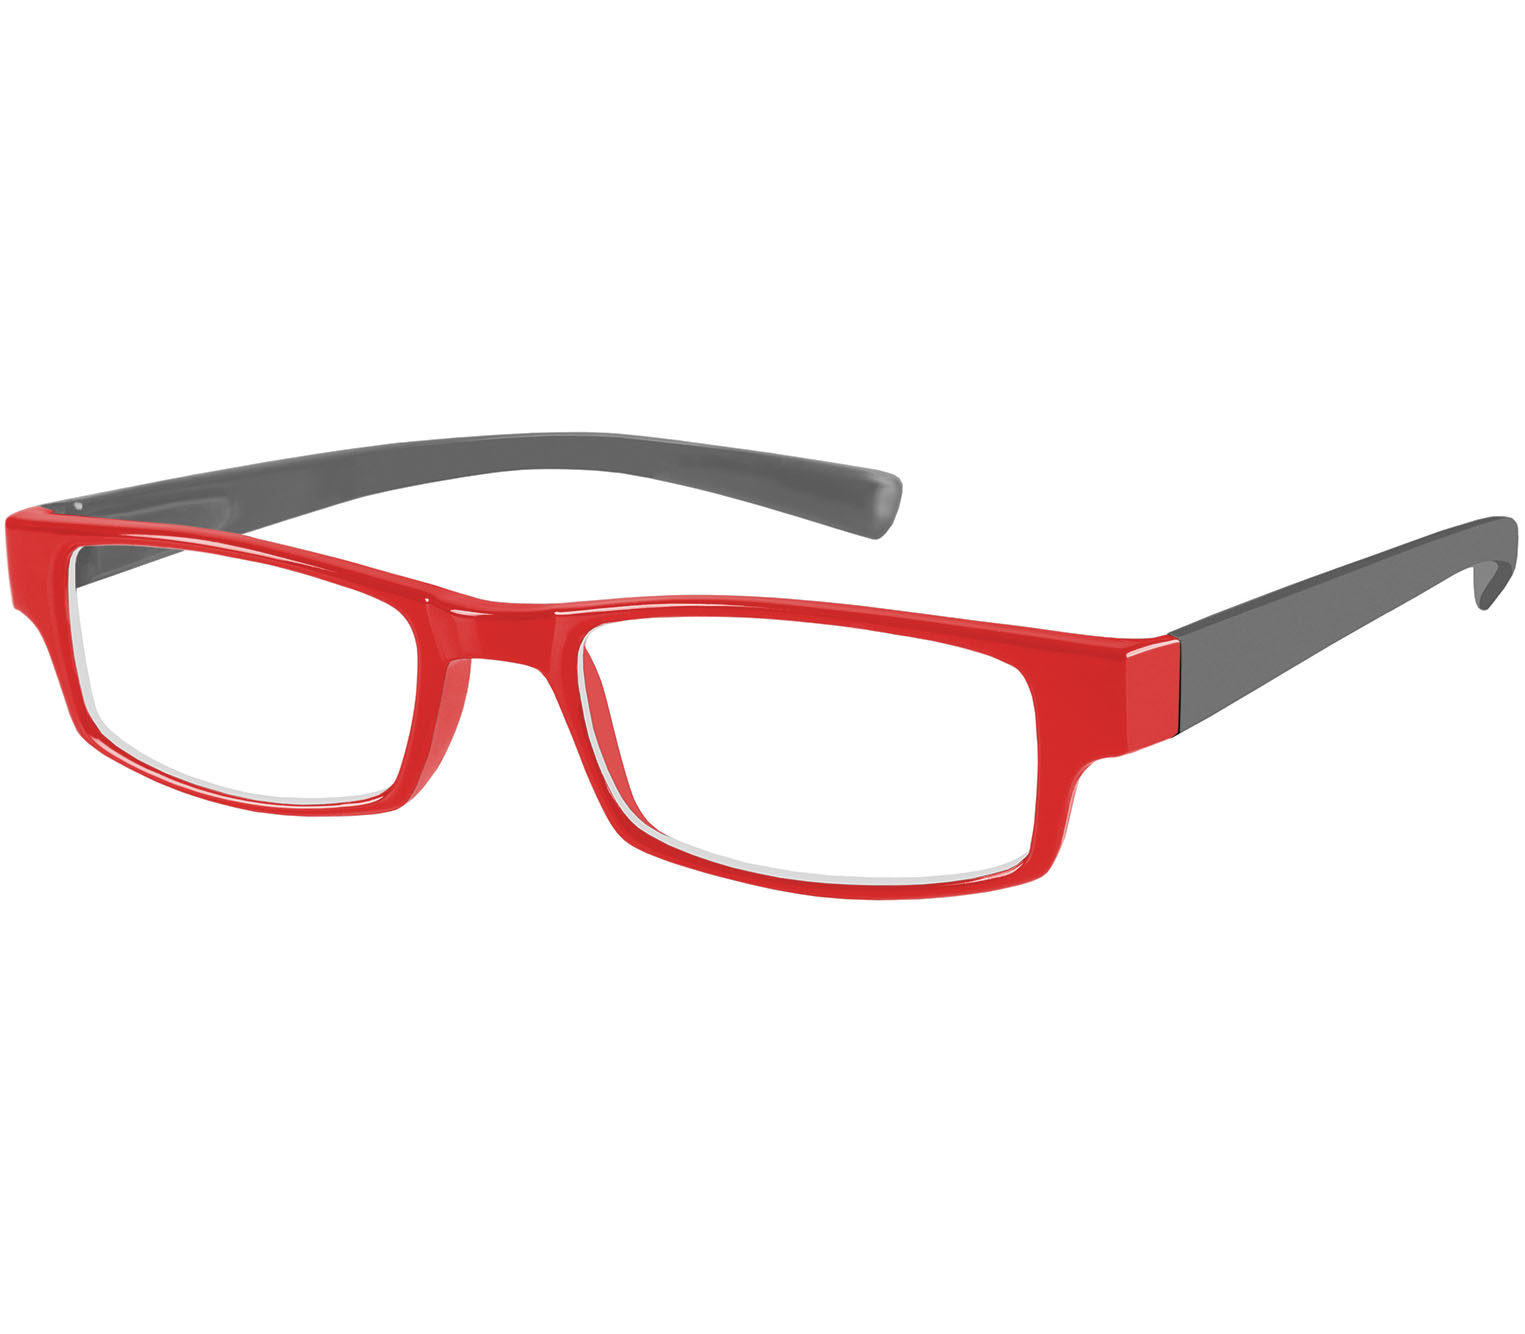 Main Image (Angle) - Magic (Red) Reading Glasses